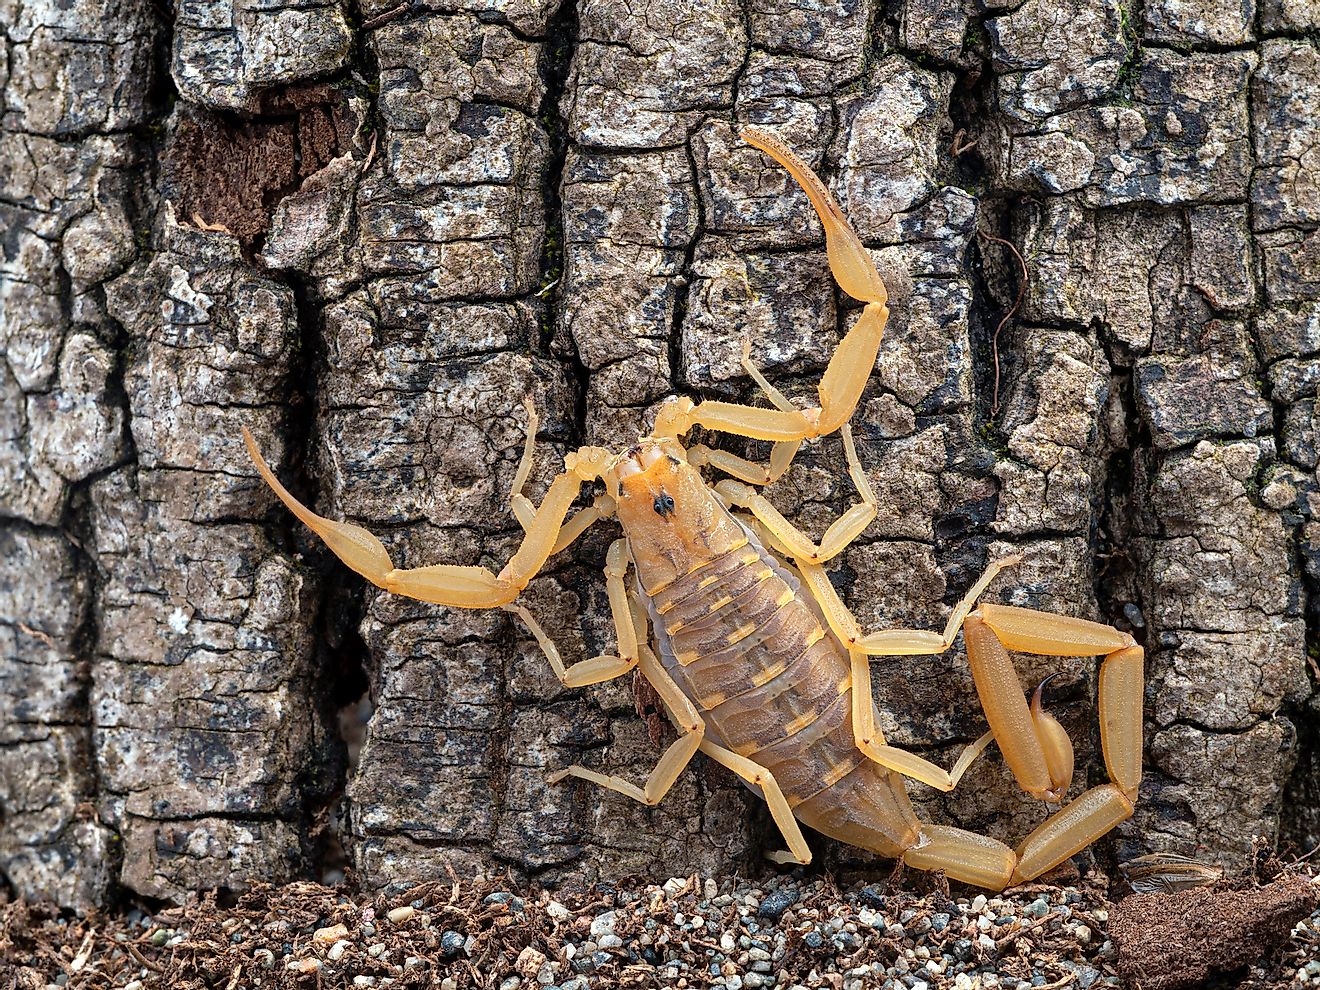 Arizona black scorpion. Image credit: Ernie Cooper/Shutterstock.com